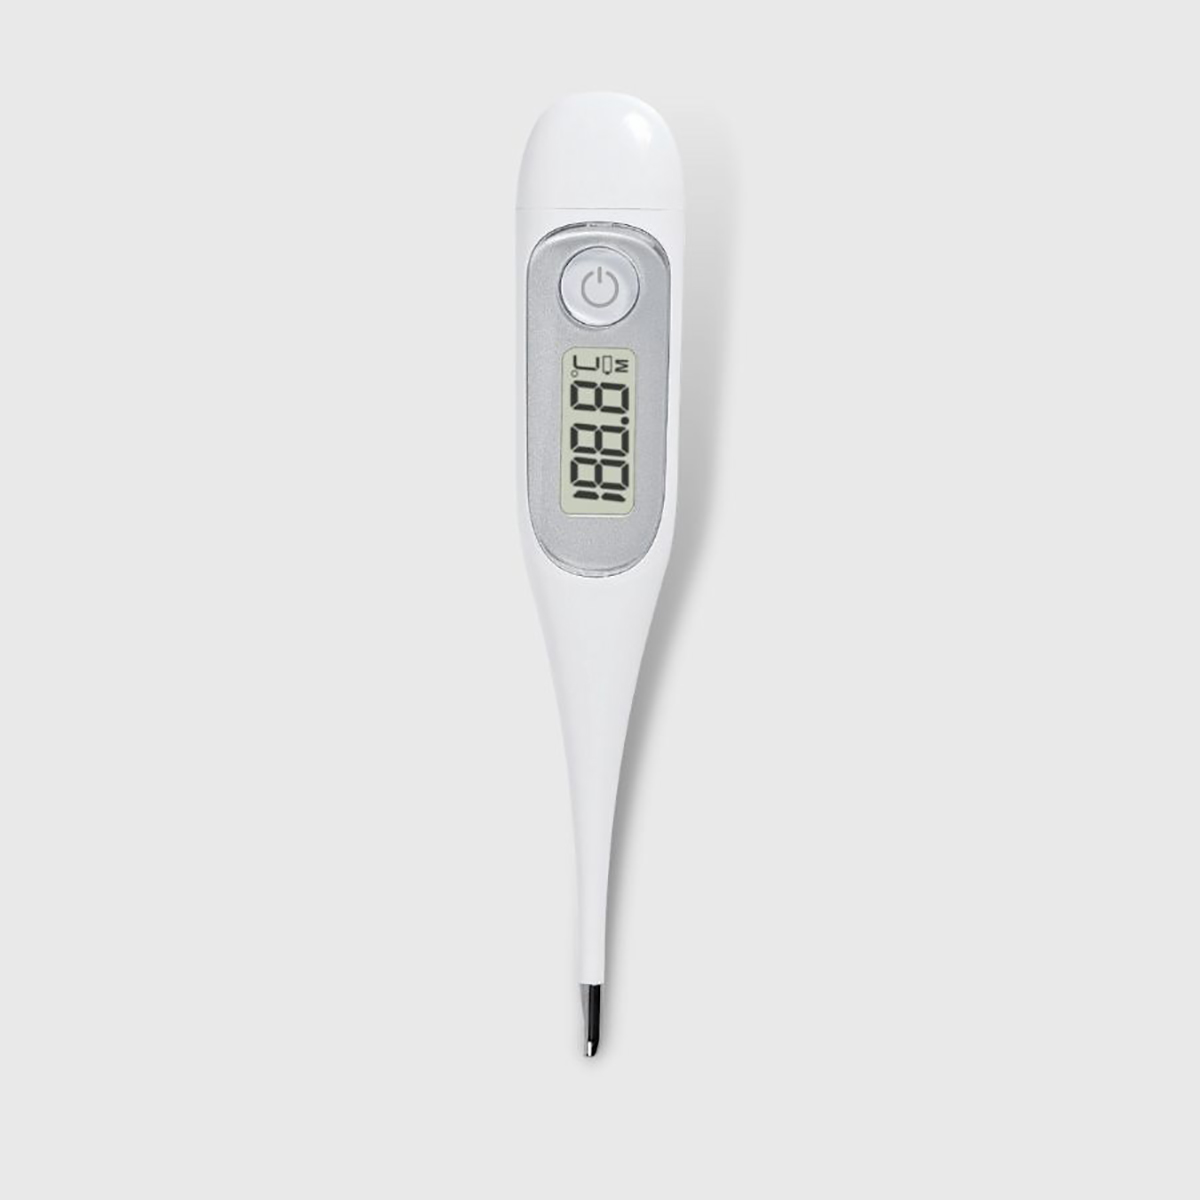 CE MDR Approval Mihlovo yo hambana-hambana Instant Read Thermometer Digital Waterproof ku Tirhisa Ekaya